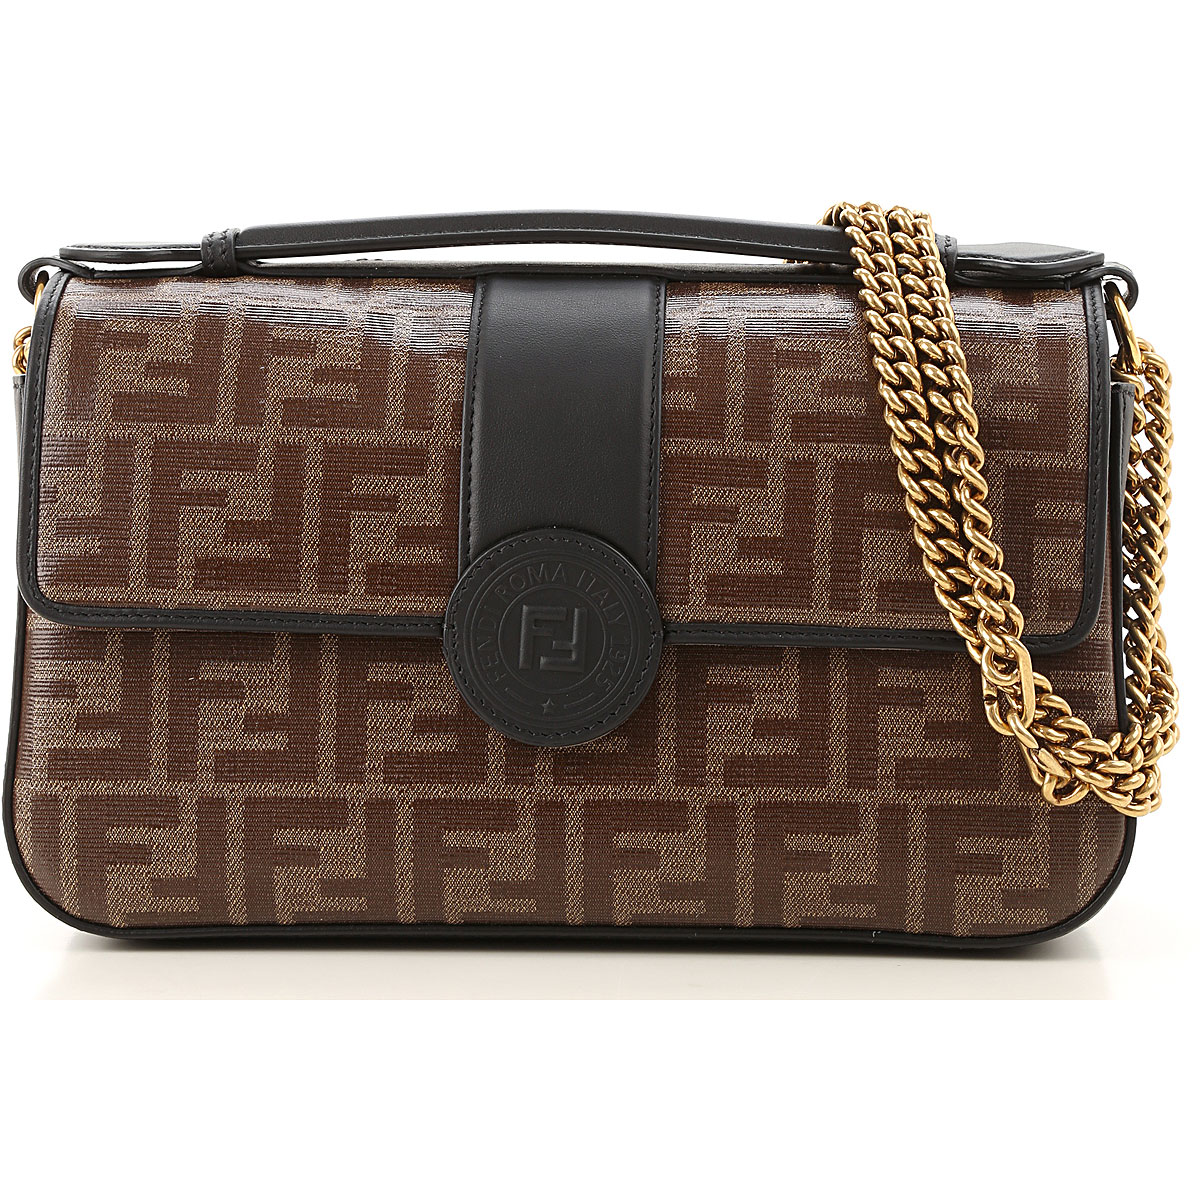 Handbags Fendi, Style code: 8bt297-a5mp-f153a